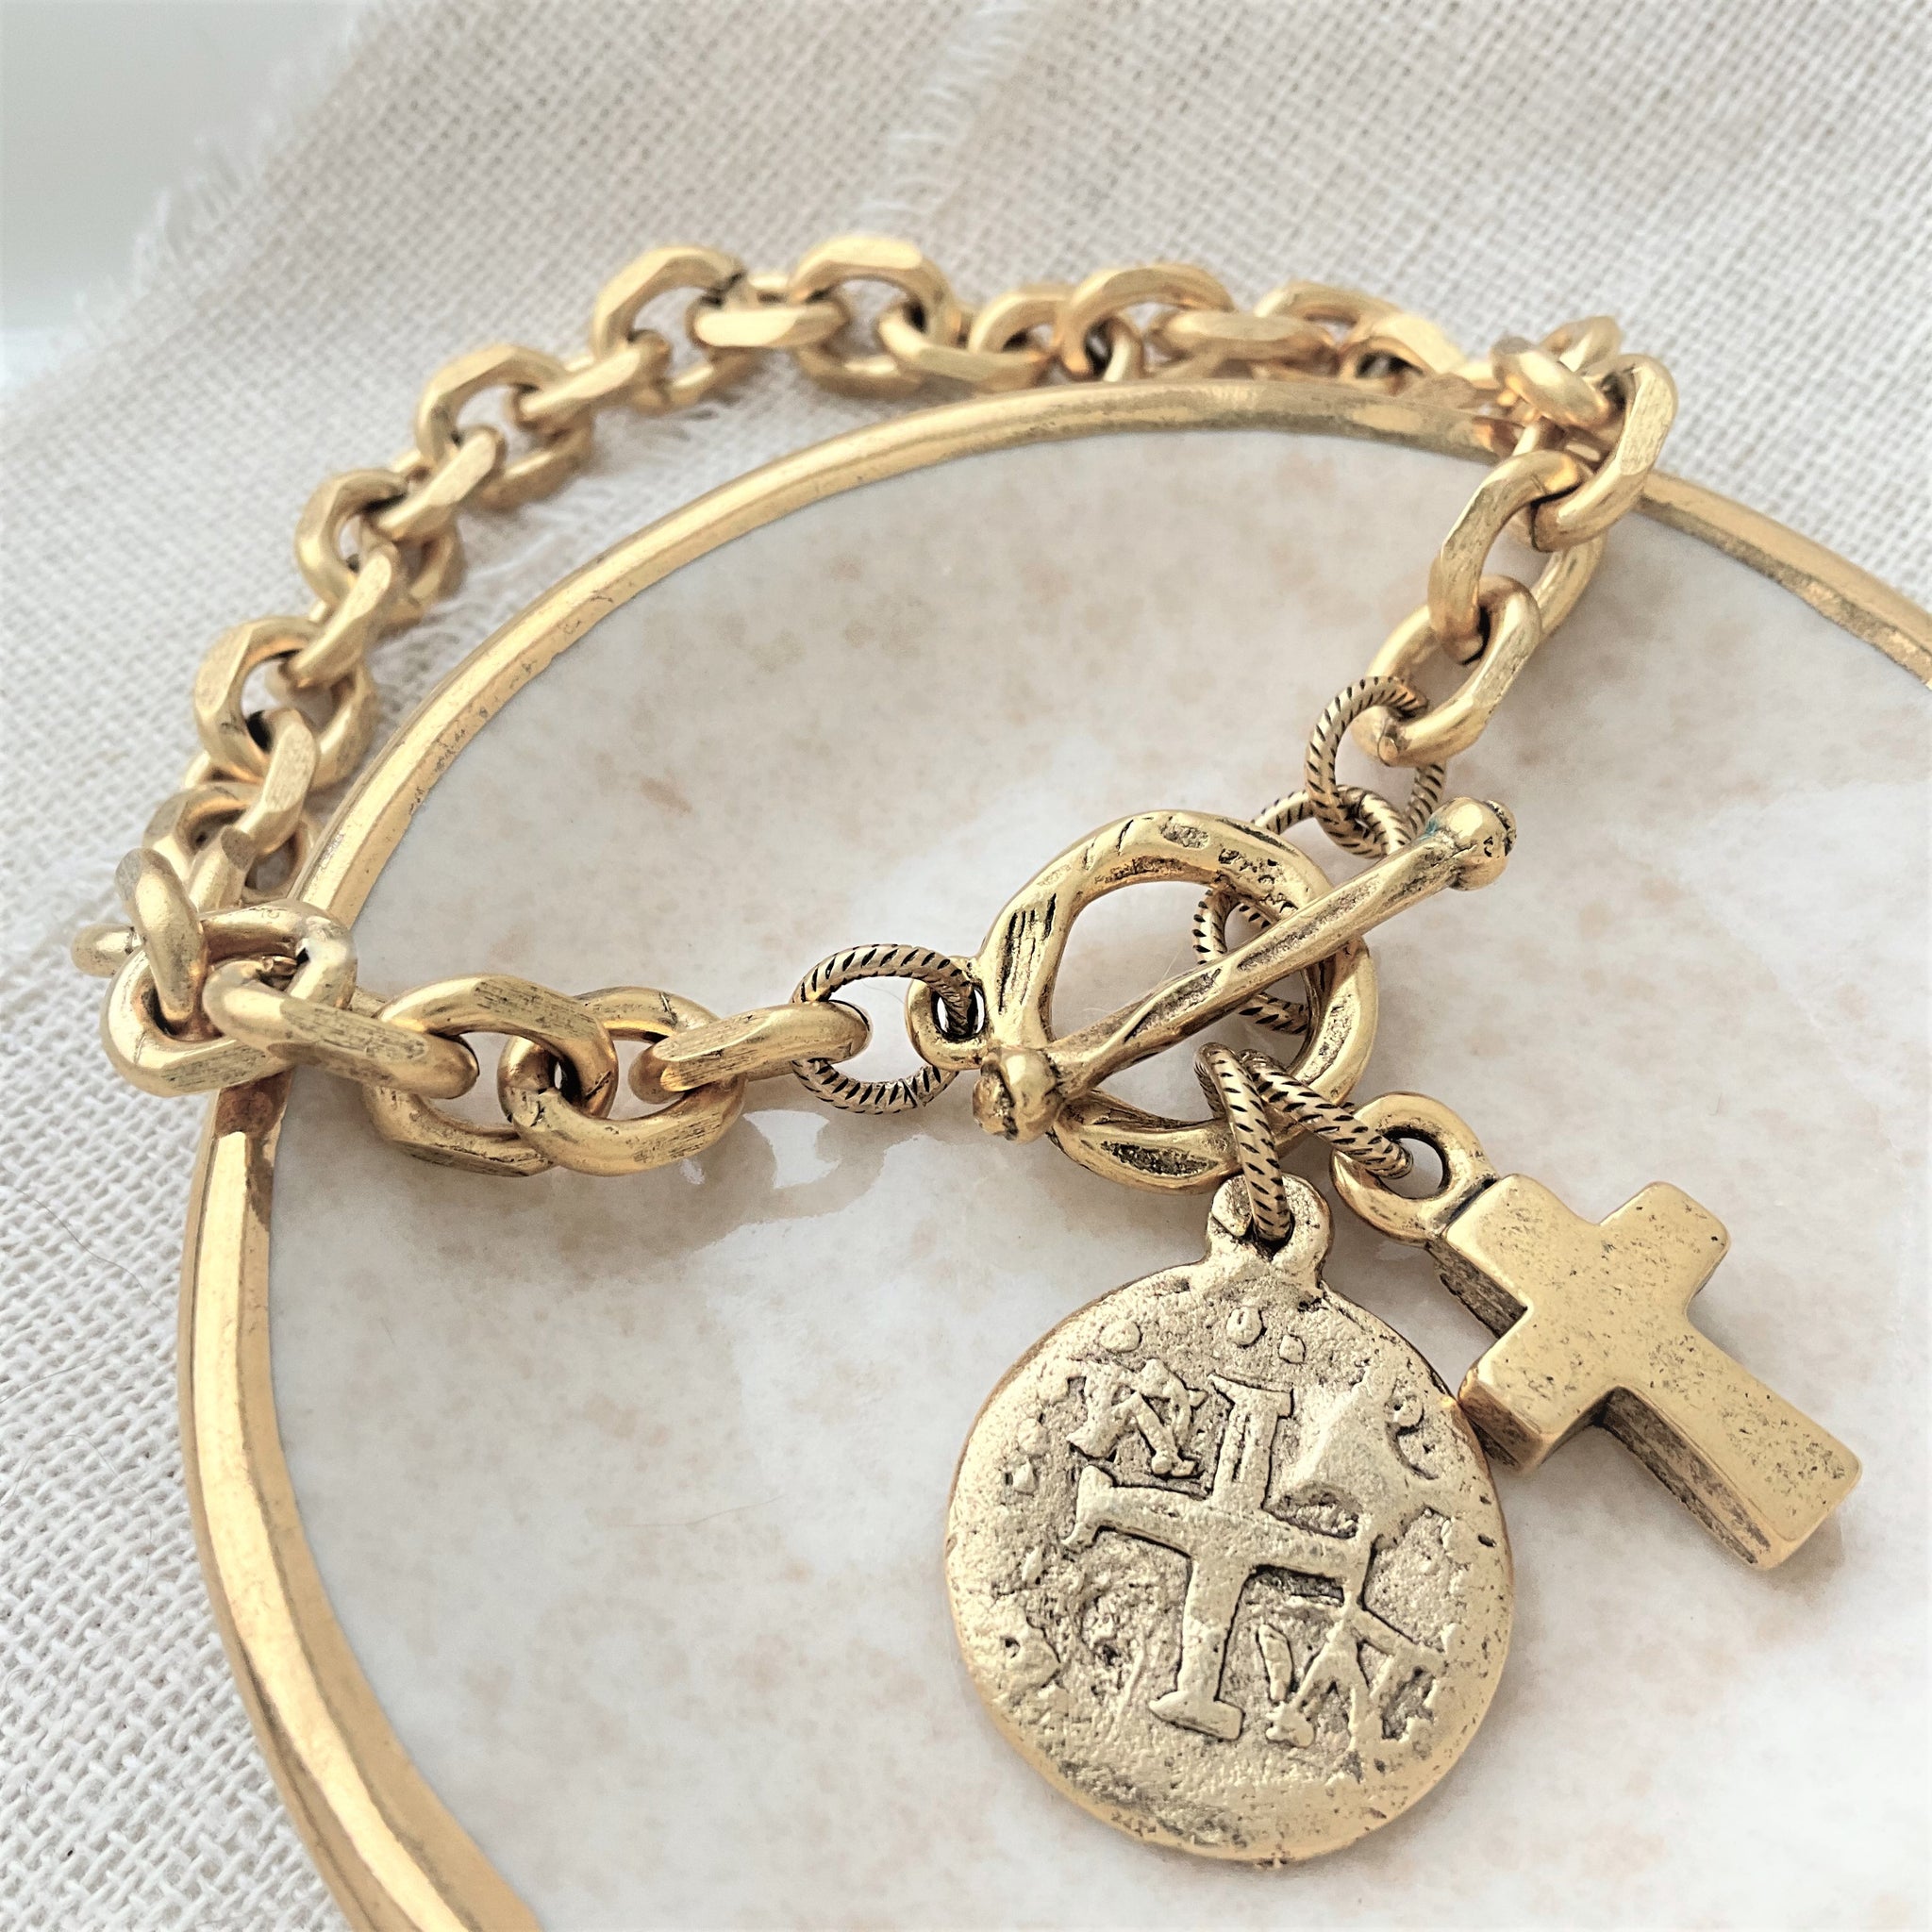 Discover 207+ gold cross bracelet